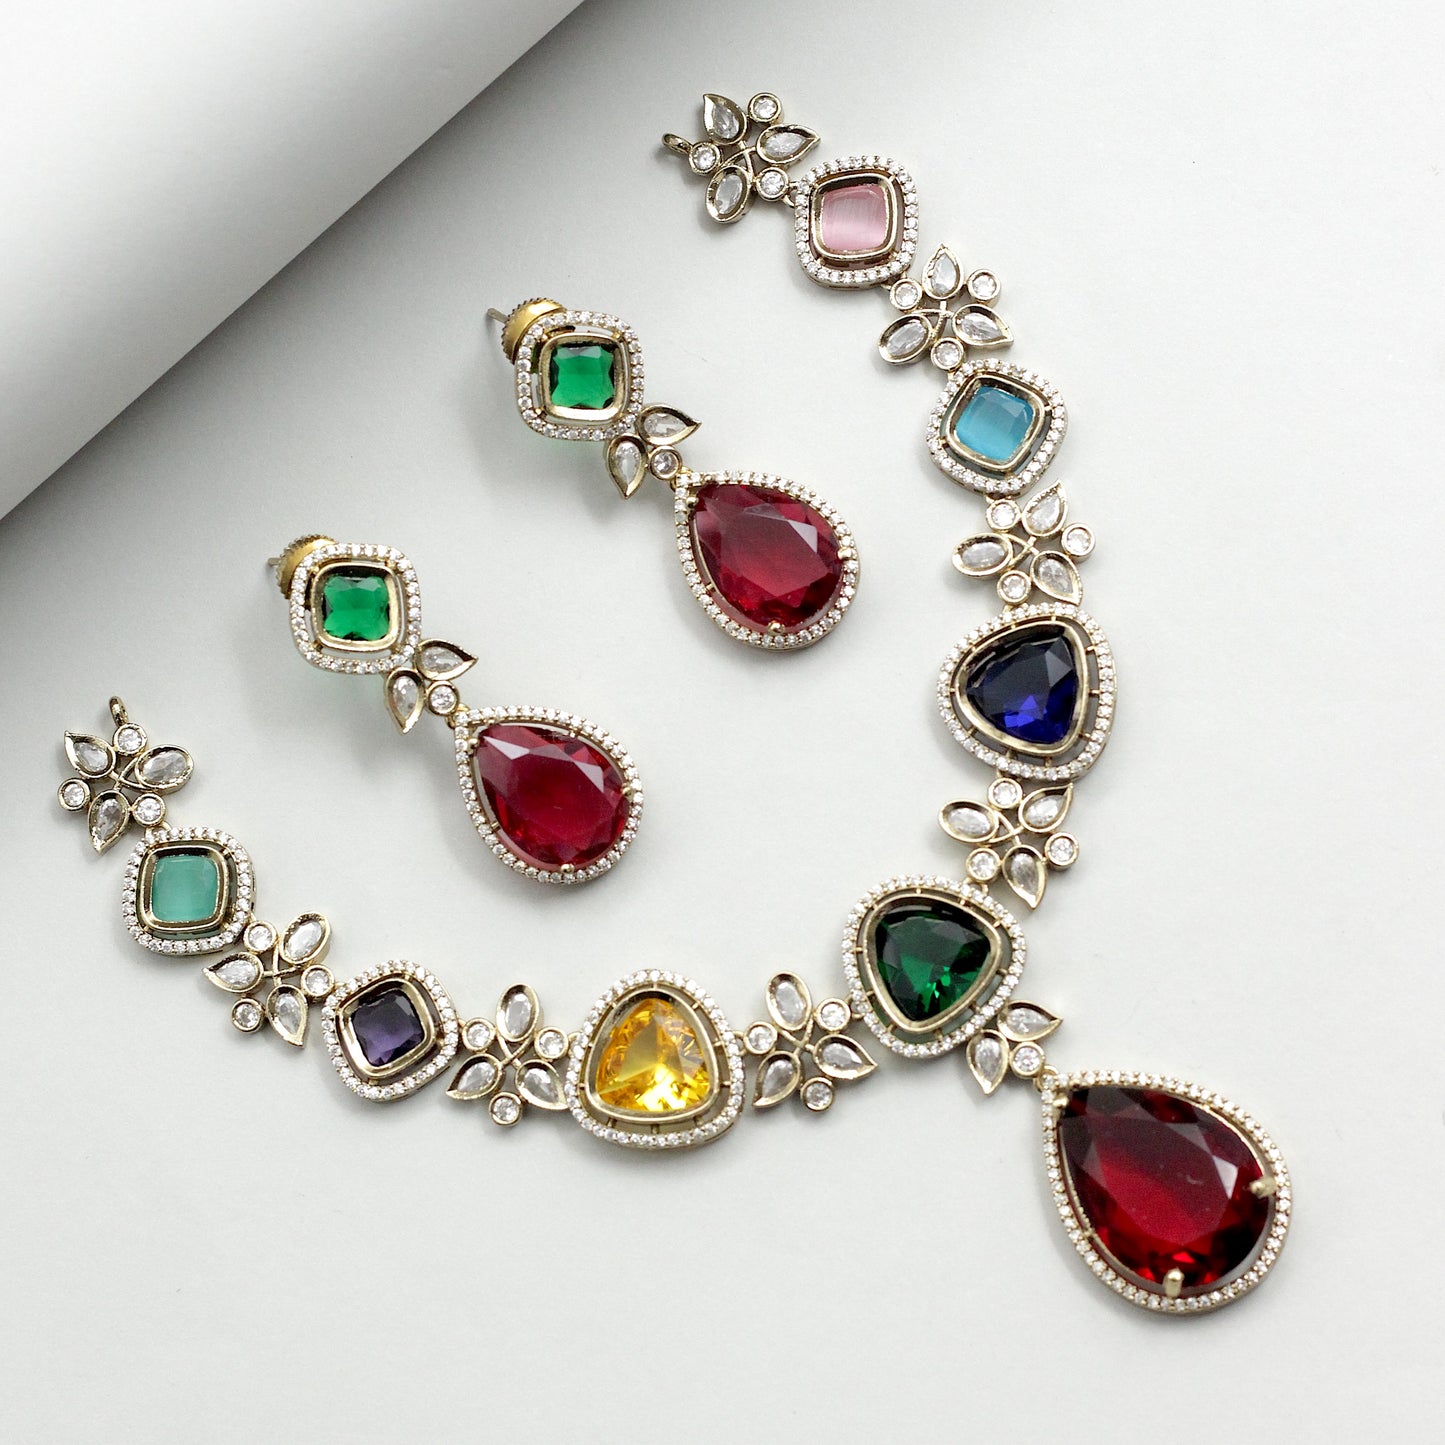 Premium Victorian Multi Colour Stone Bridal Necklace Set